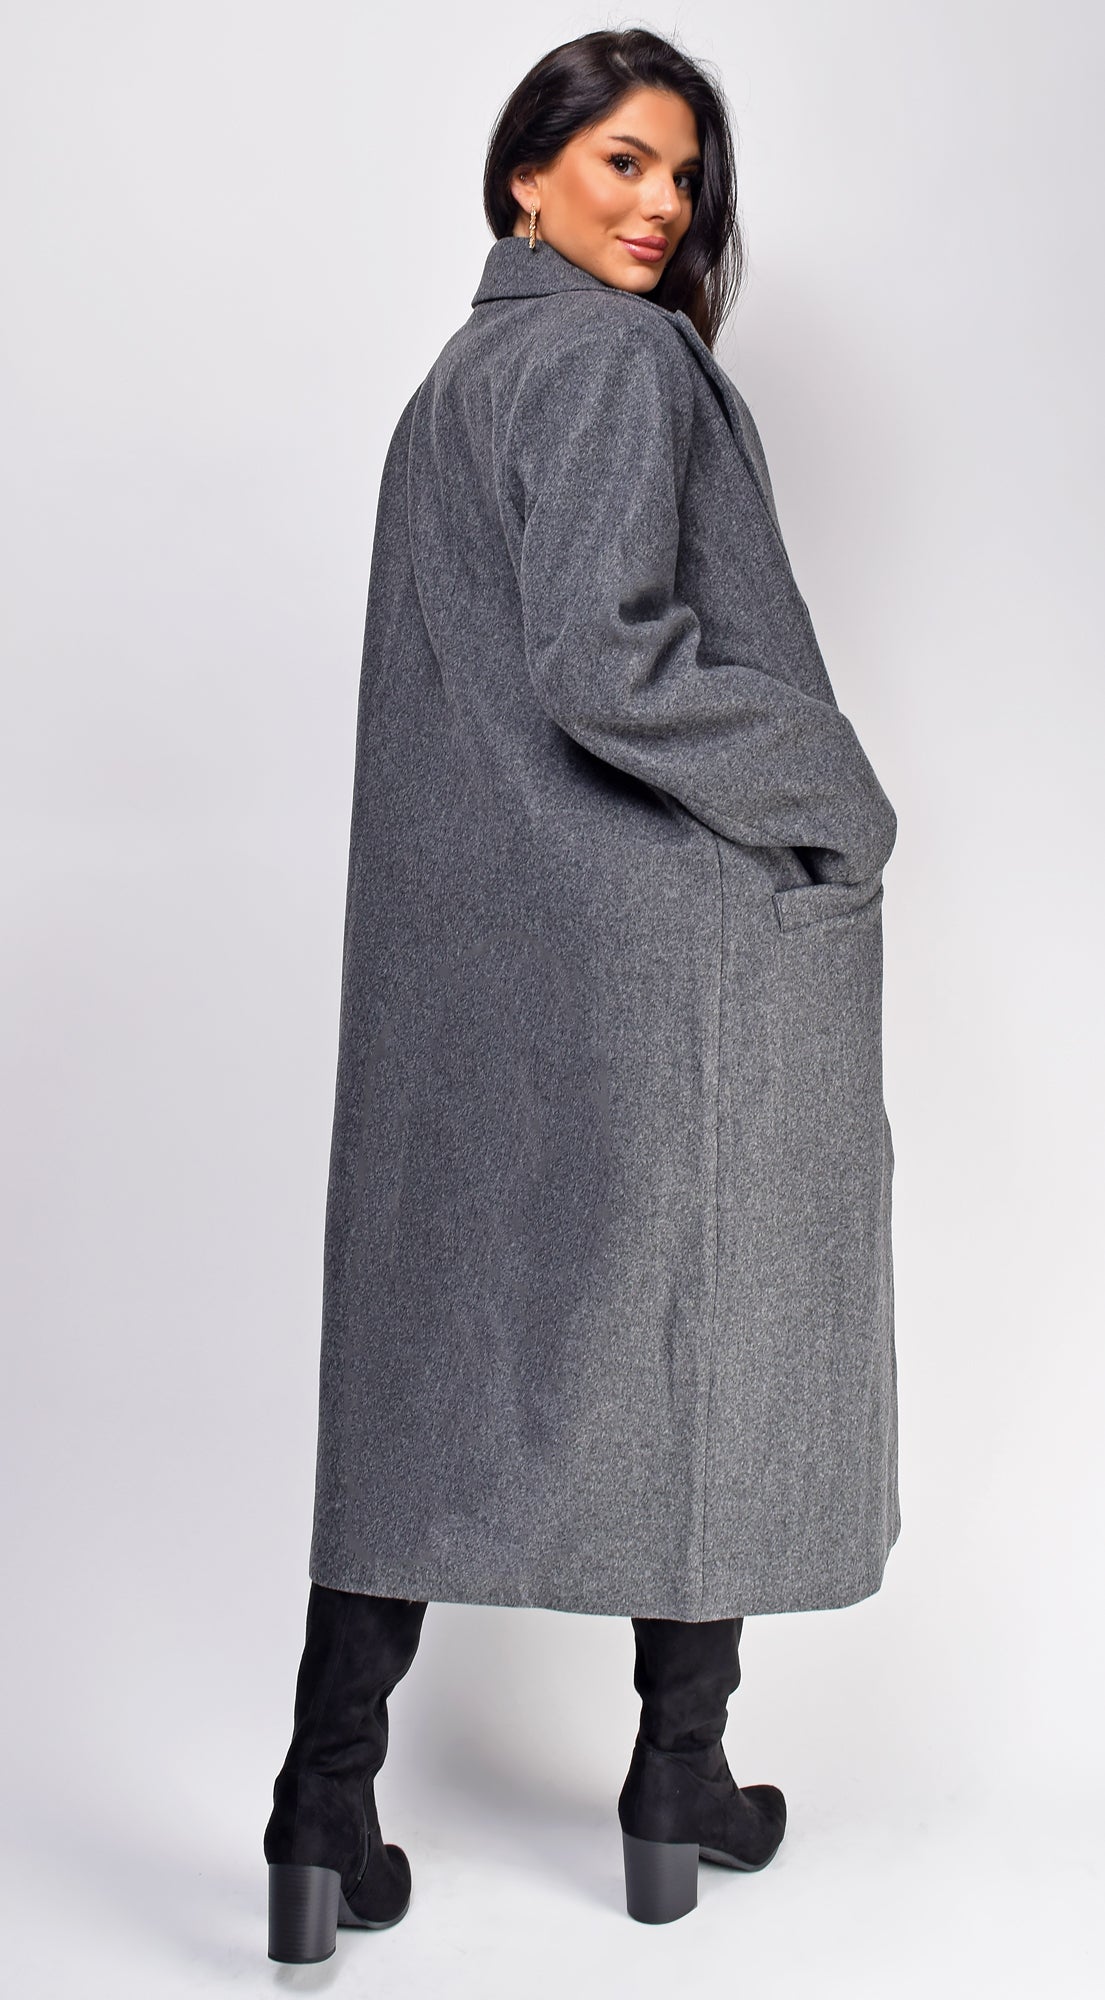 Yeva Gray Long Collared Coat